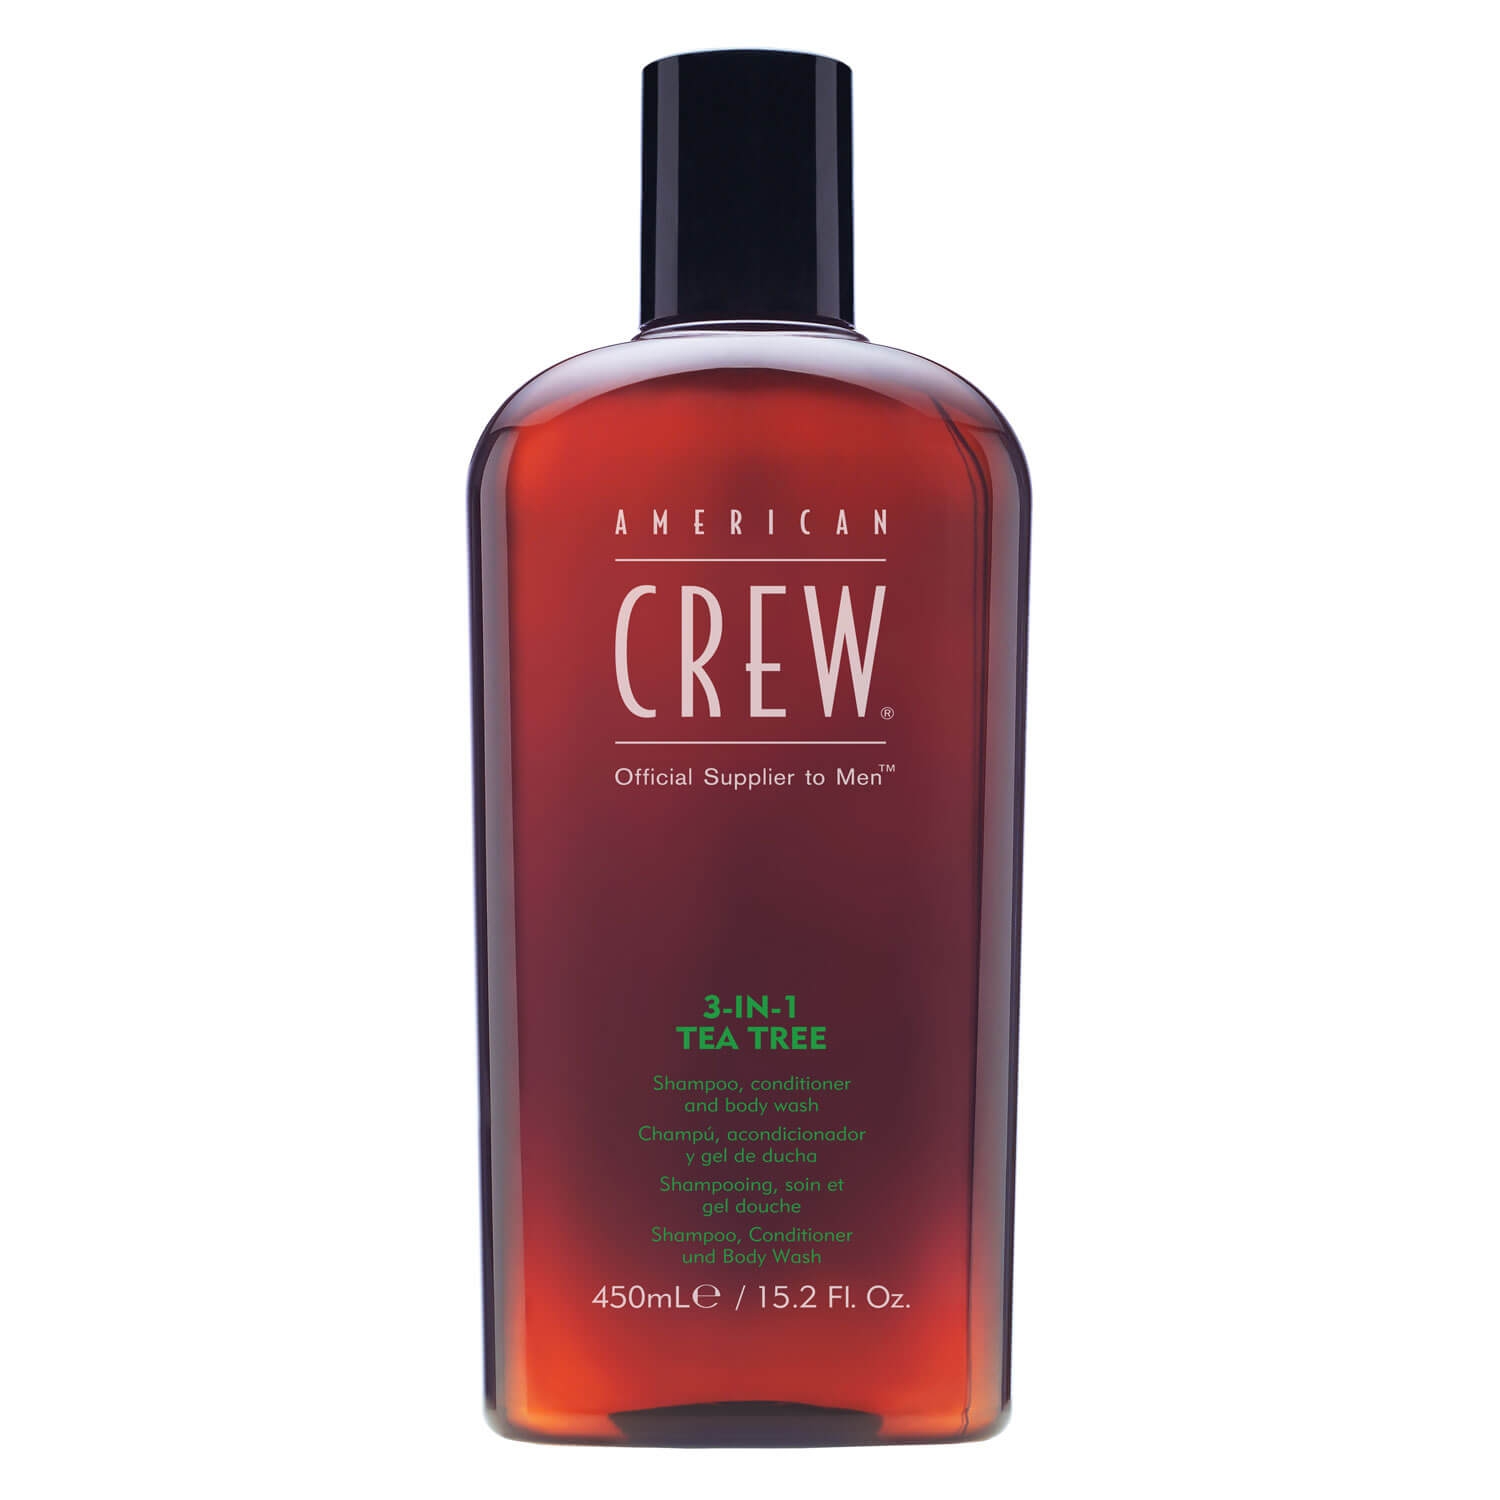 Produktbild von Crew Hair & Body Care - American Crew 3-in-1 Tea Tree Shampoo, Conditioner & Body Wash